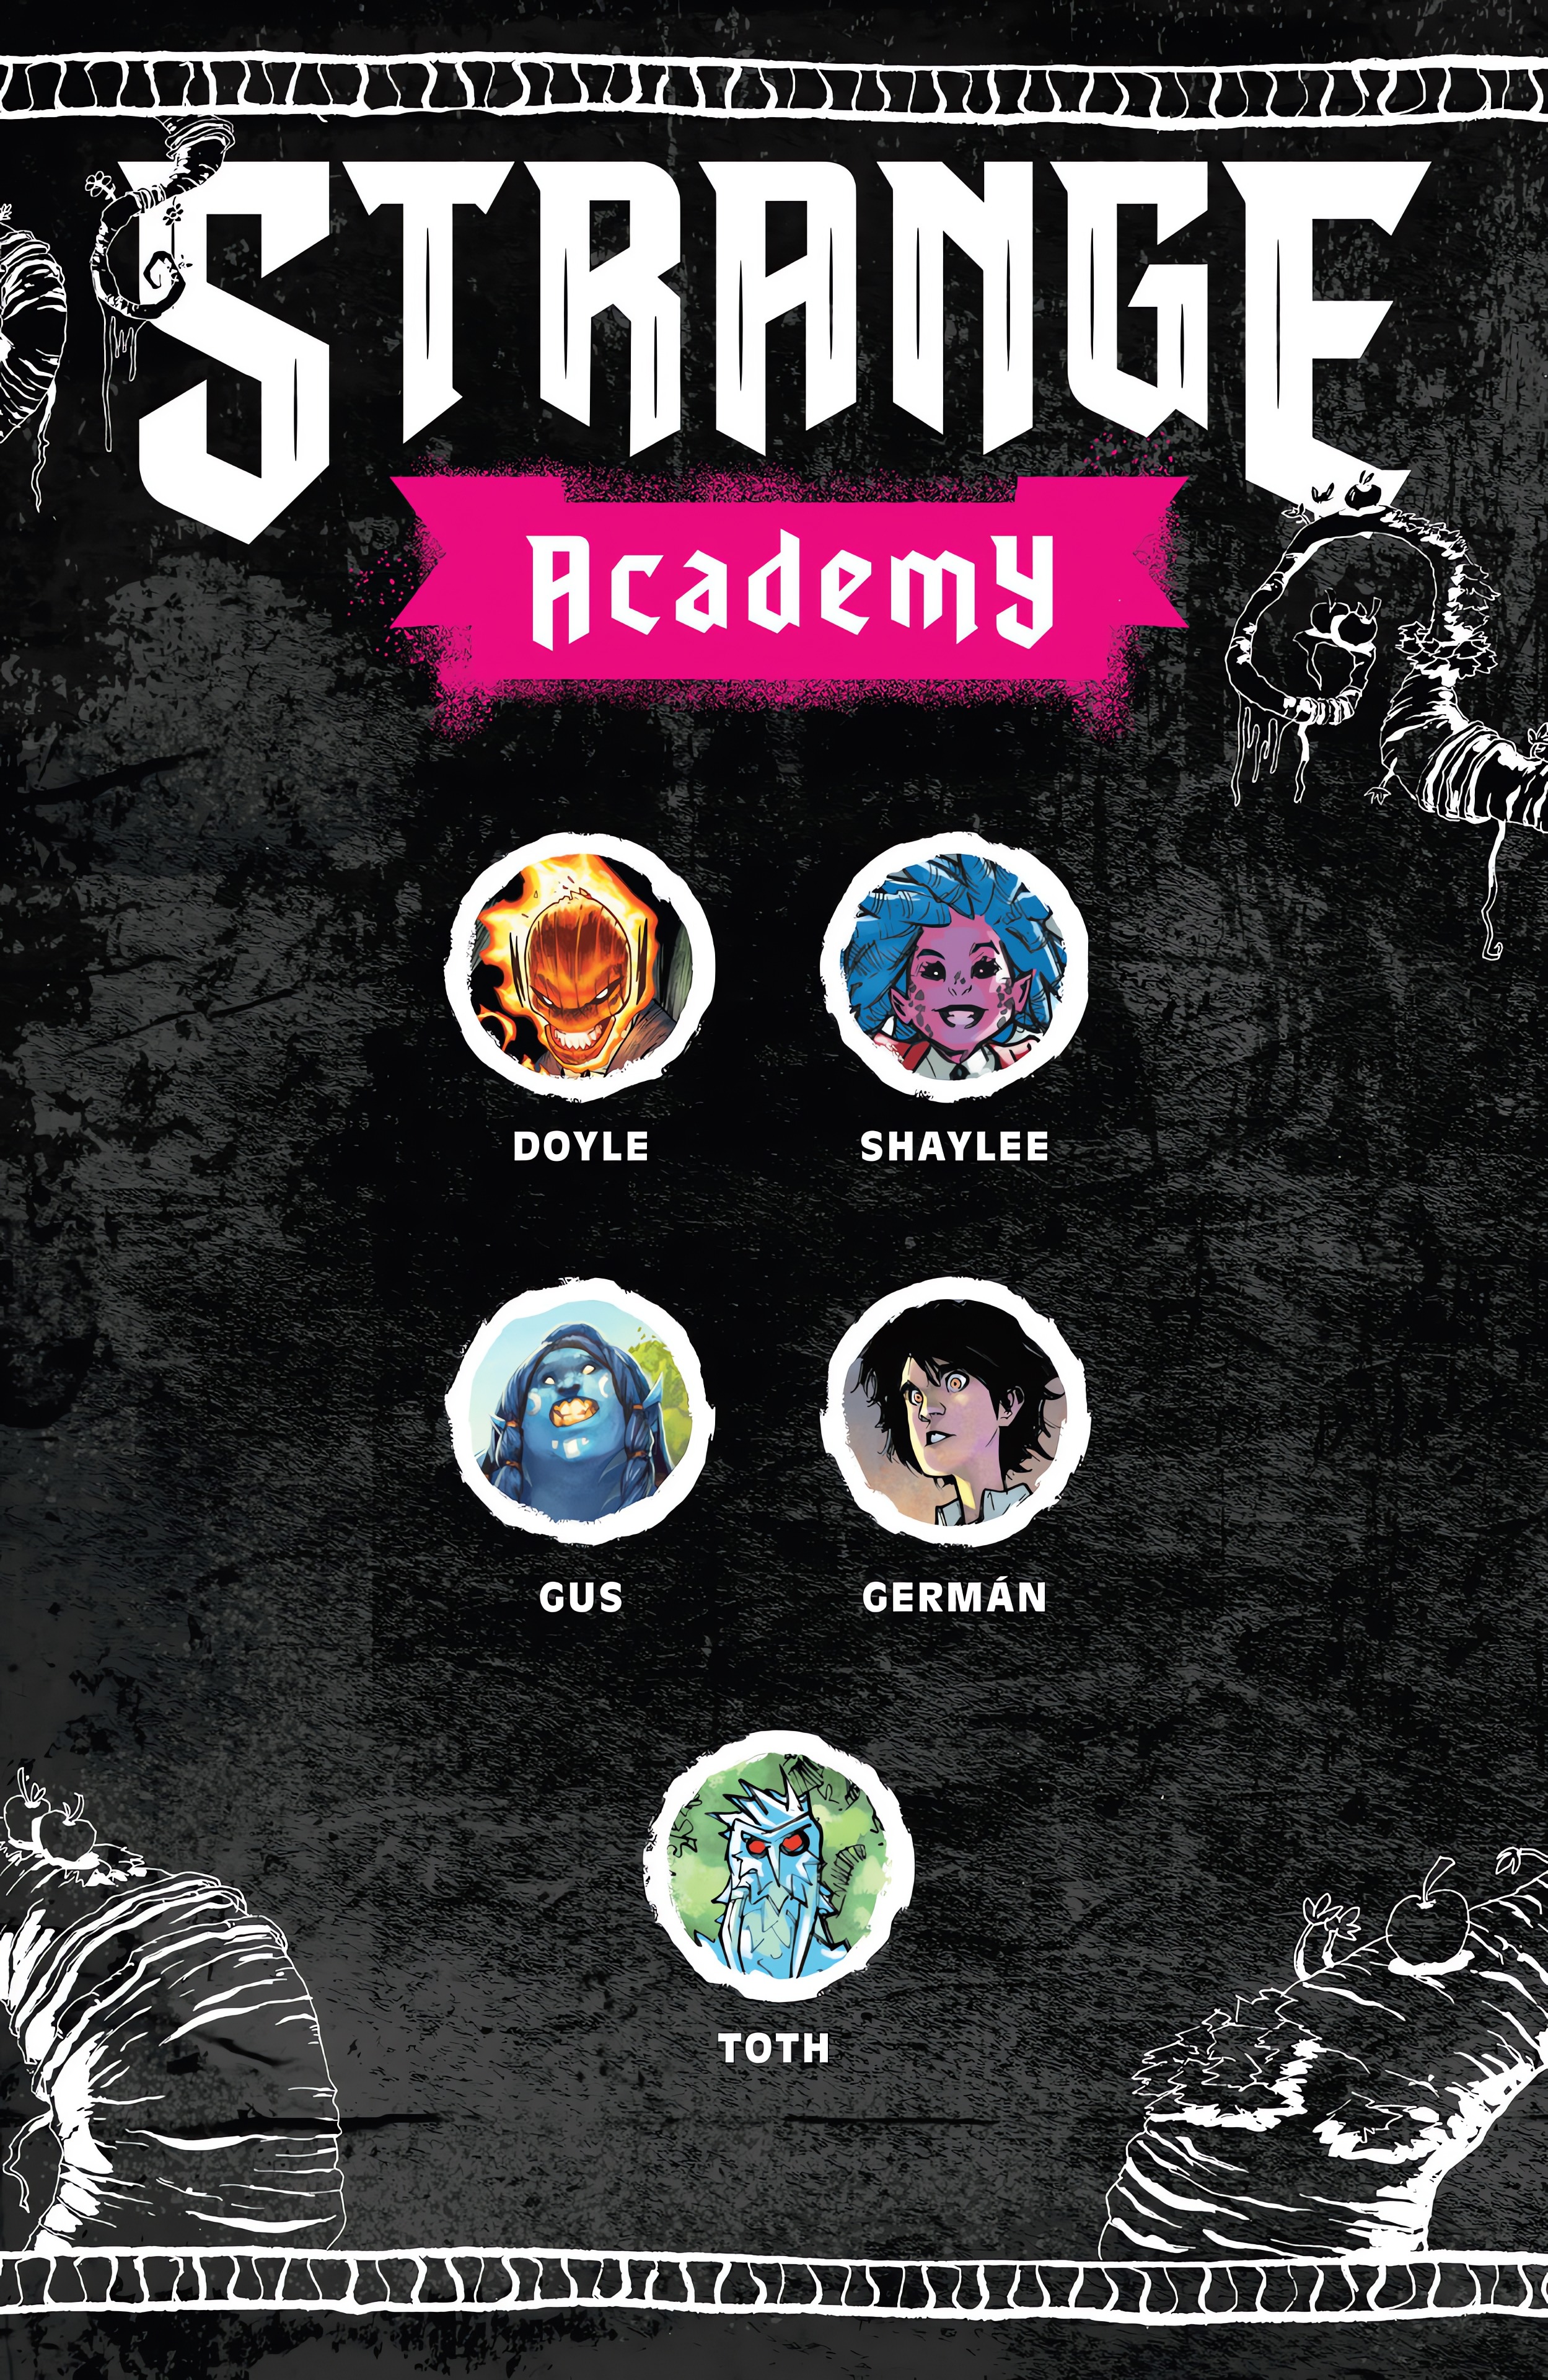 Read online Strange Academy: Miles Morales comic -  Issue #1 - 3